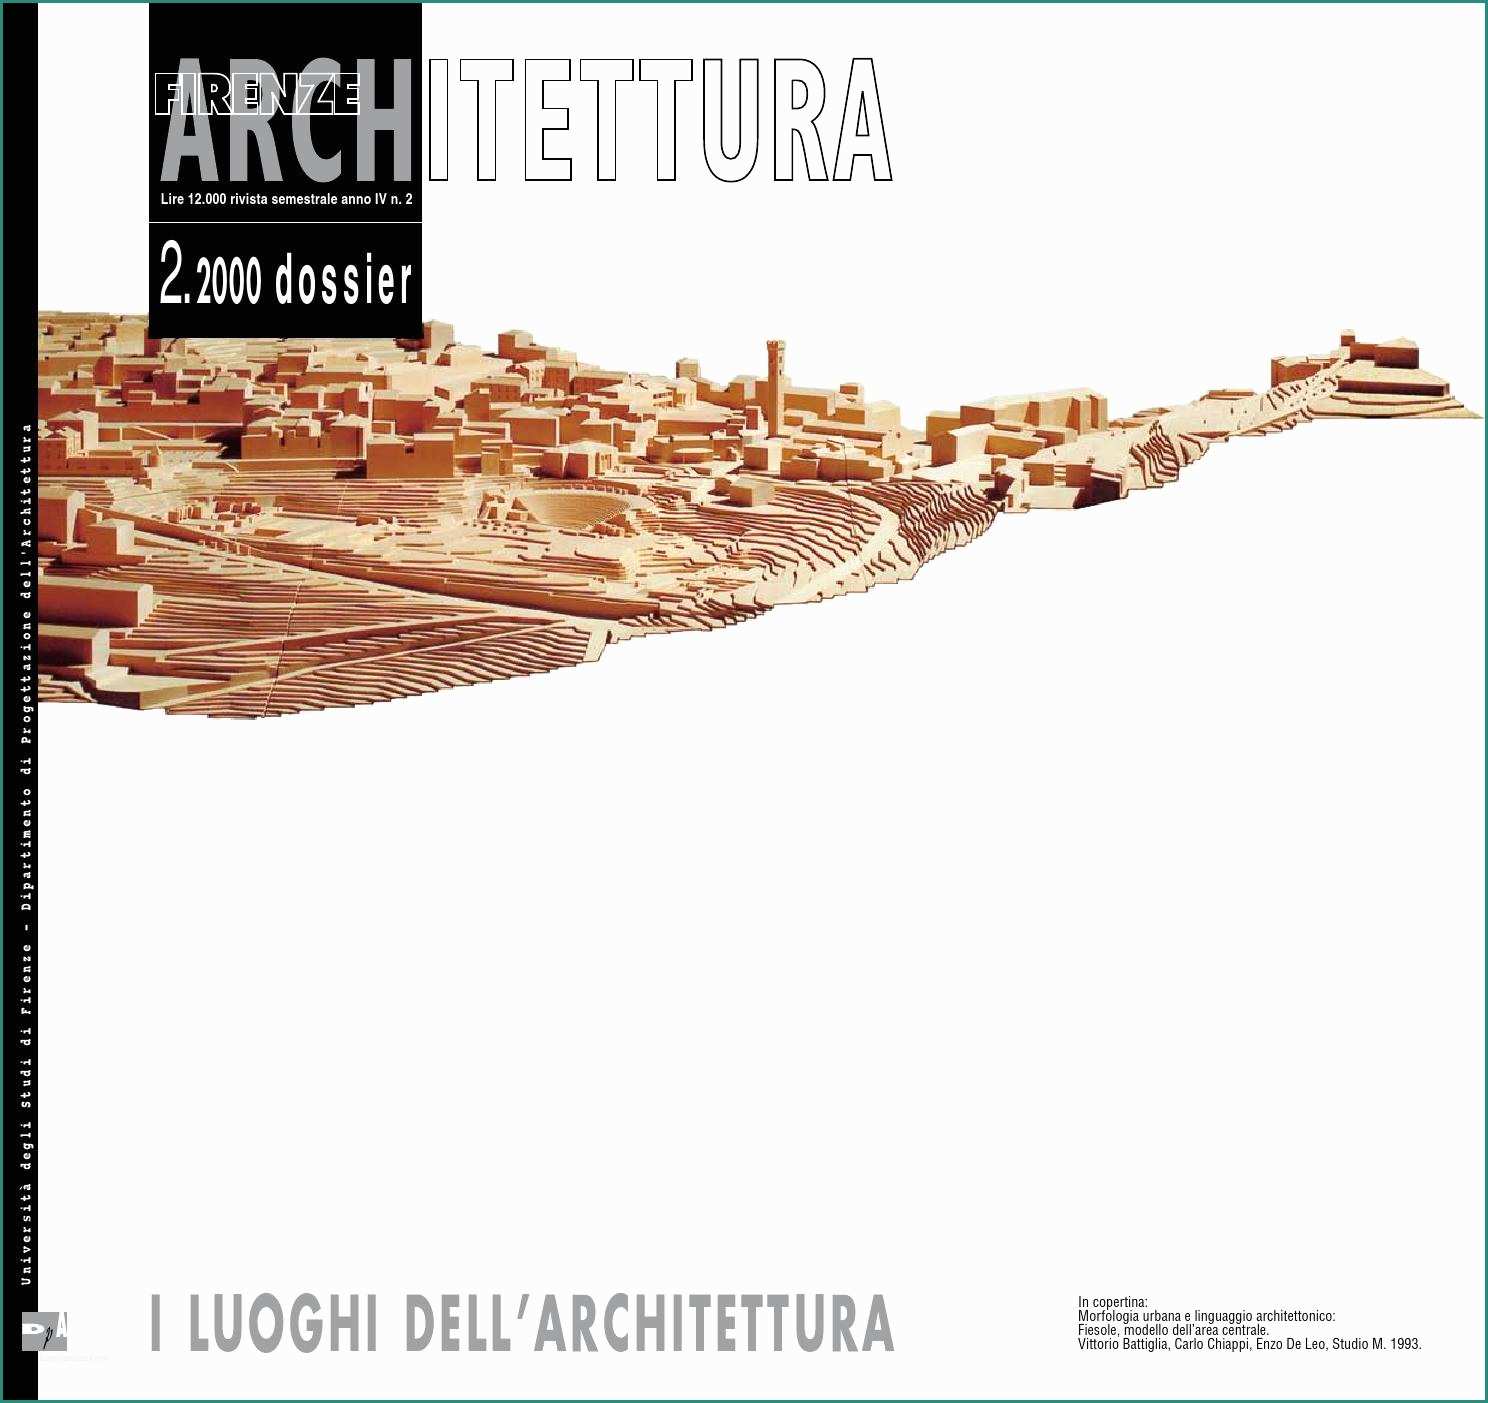 Architettura Case Moderne Idee E Firenze Architettura 2000 2 by Dida issuu